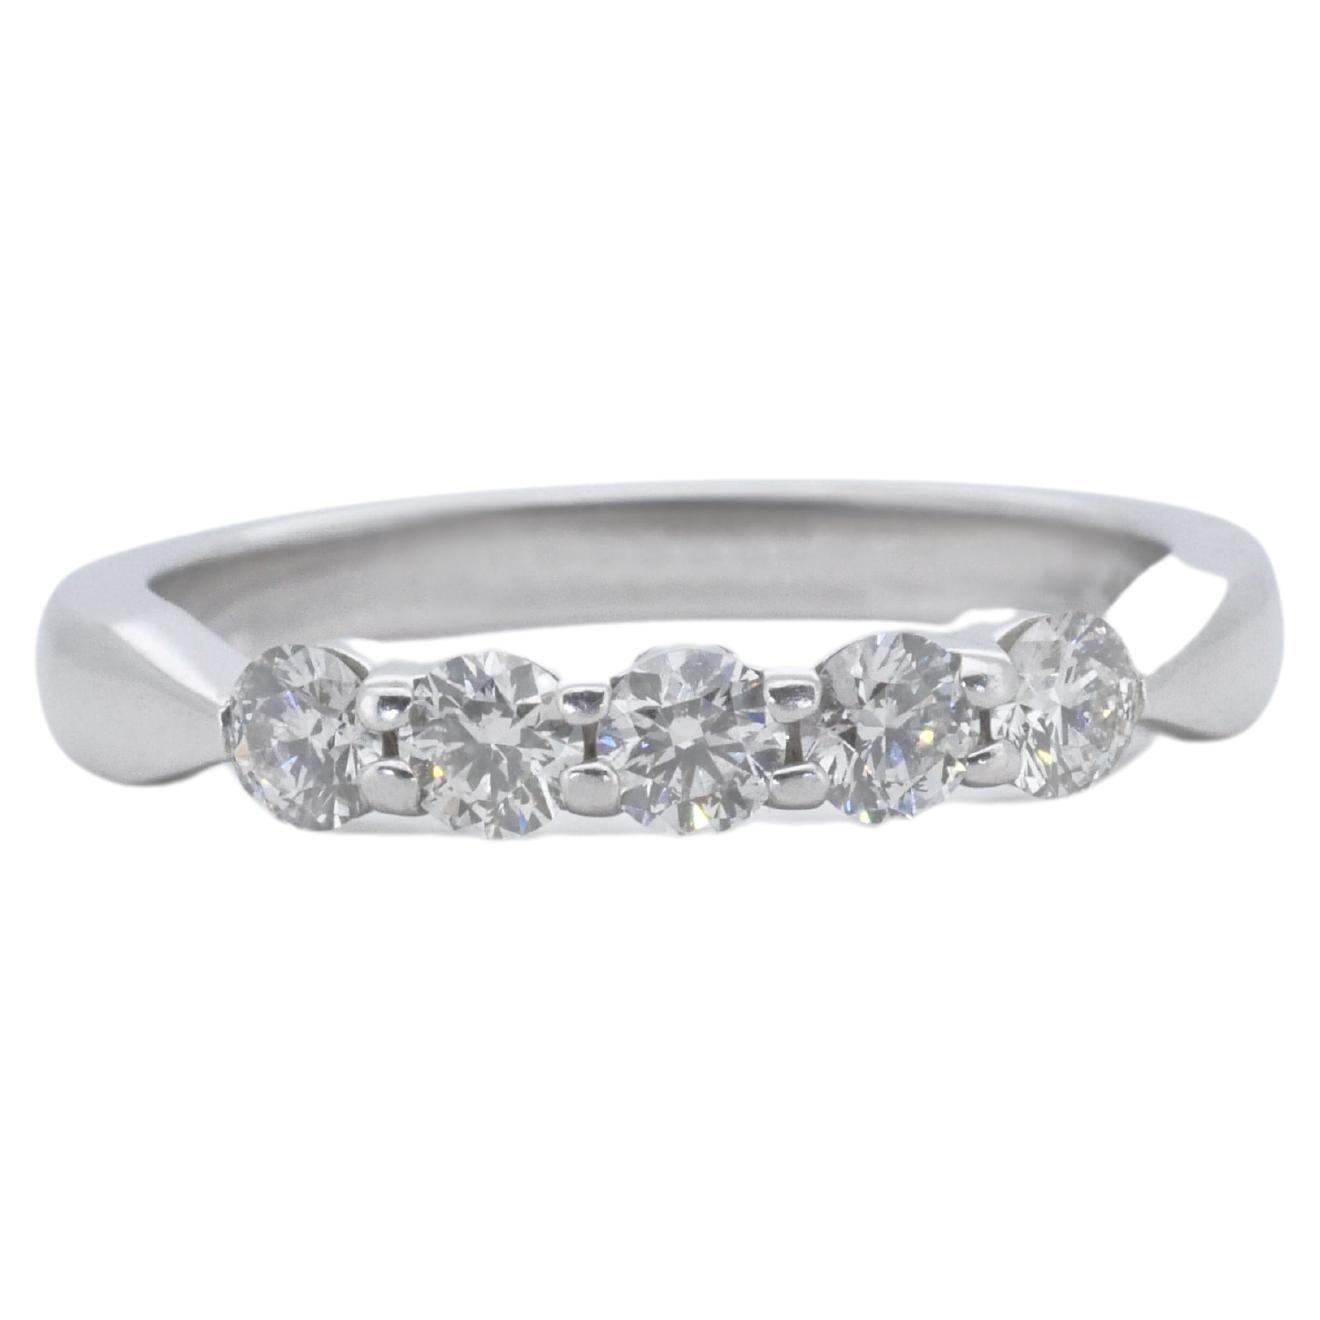 Elegant 18k White Gold 5 Stone Ring with 0.50 total carat of Natural Diamonds